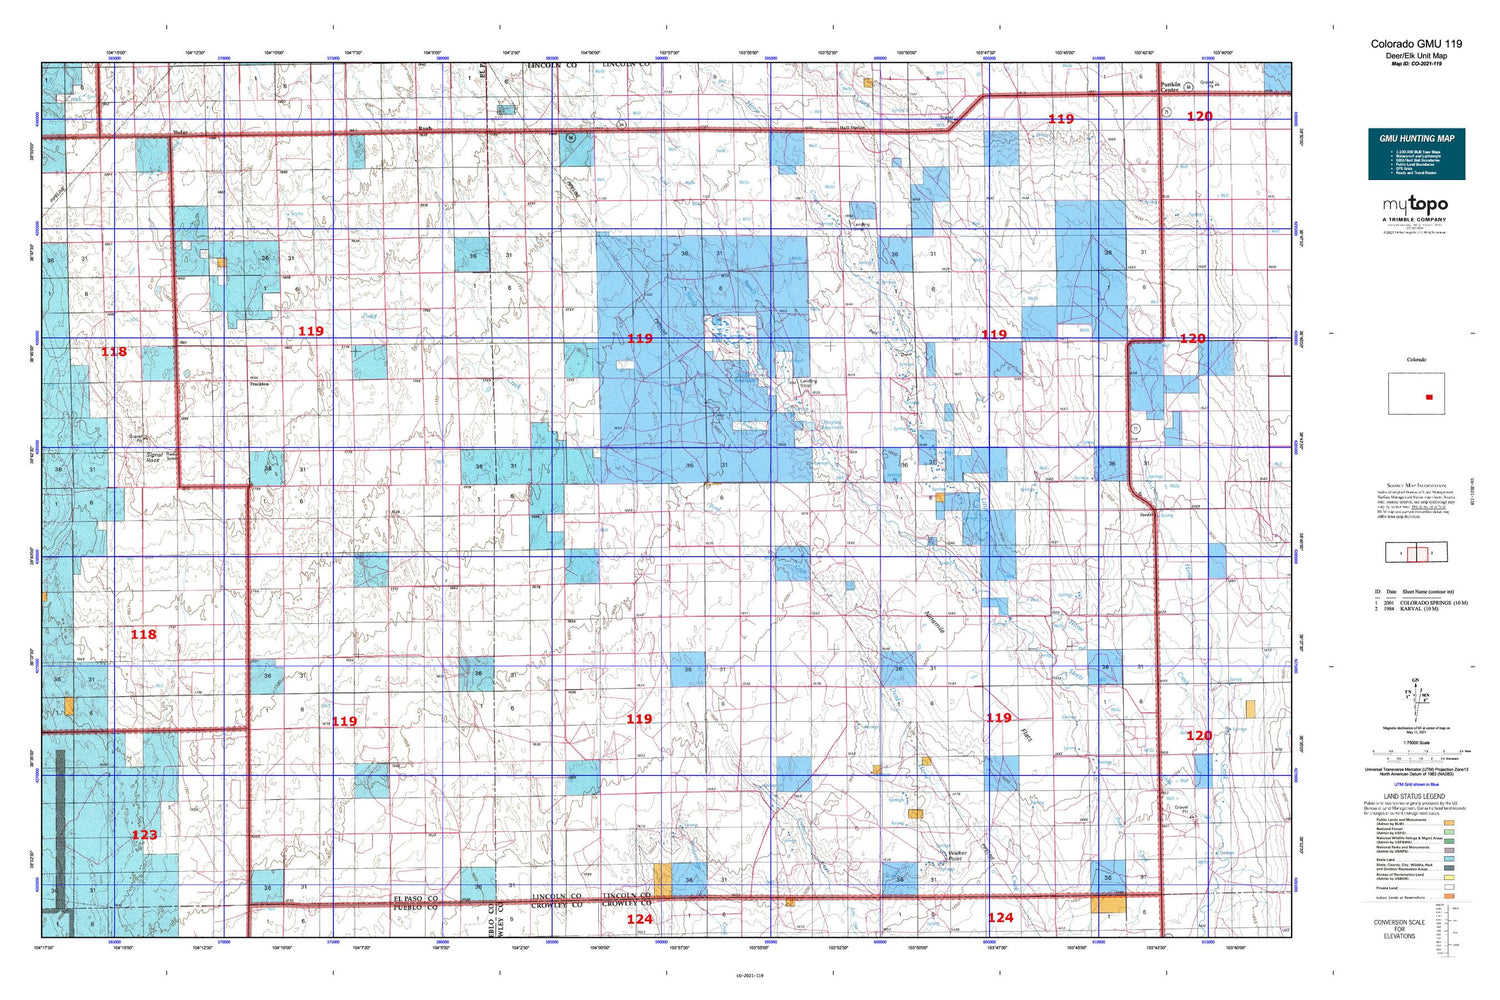 Colorado GMU 119 Map Image